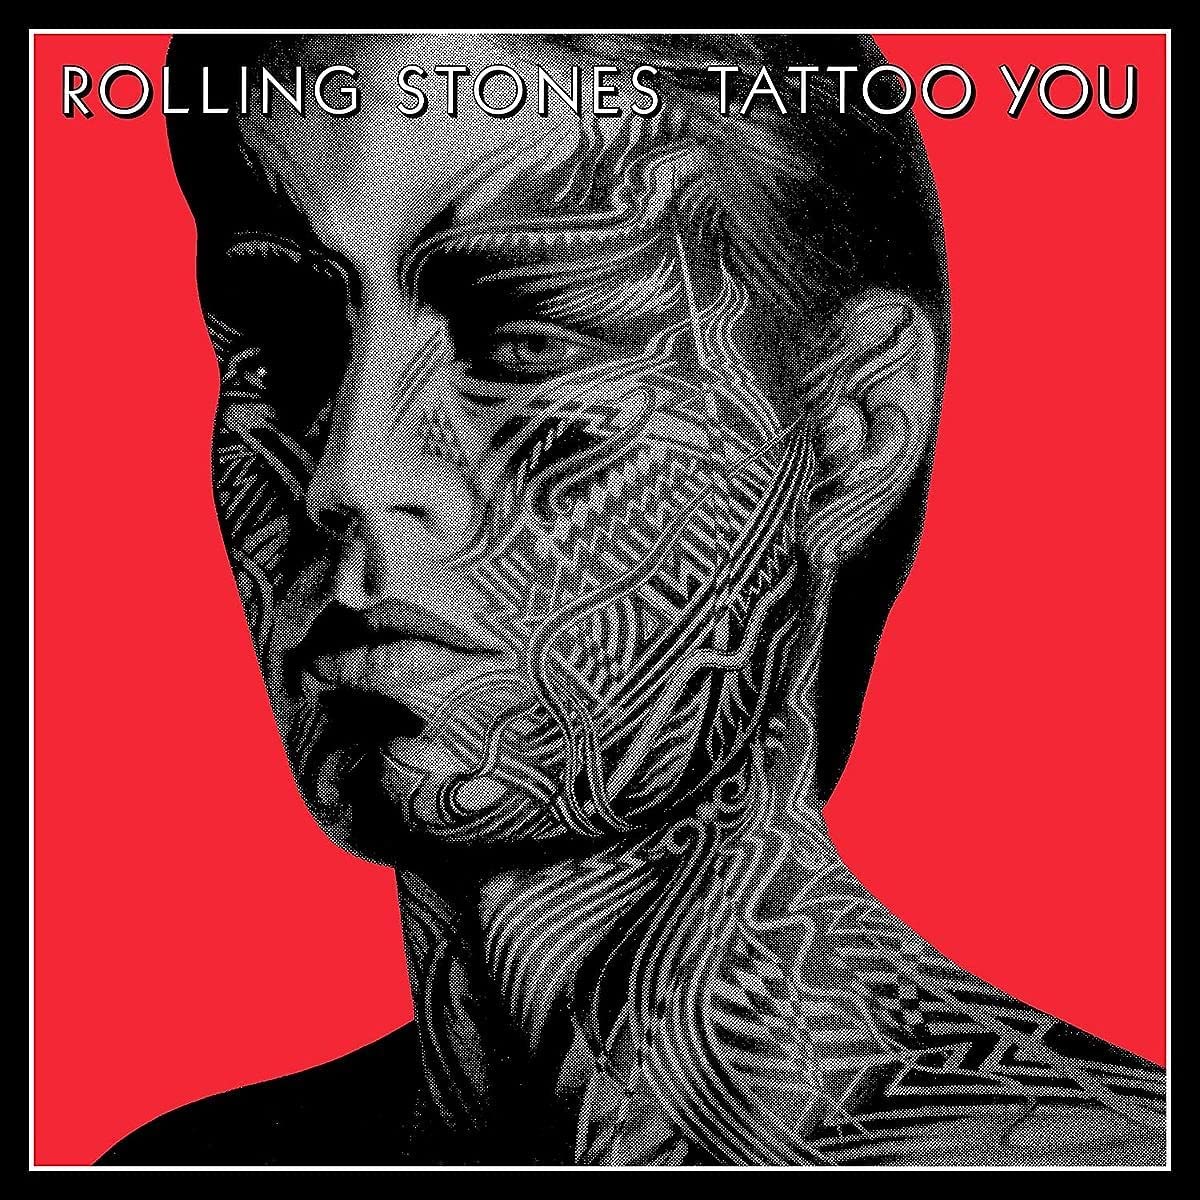 Tattoo You (2-cd)